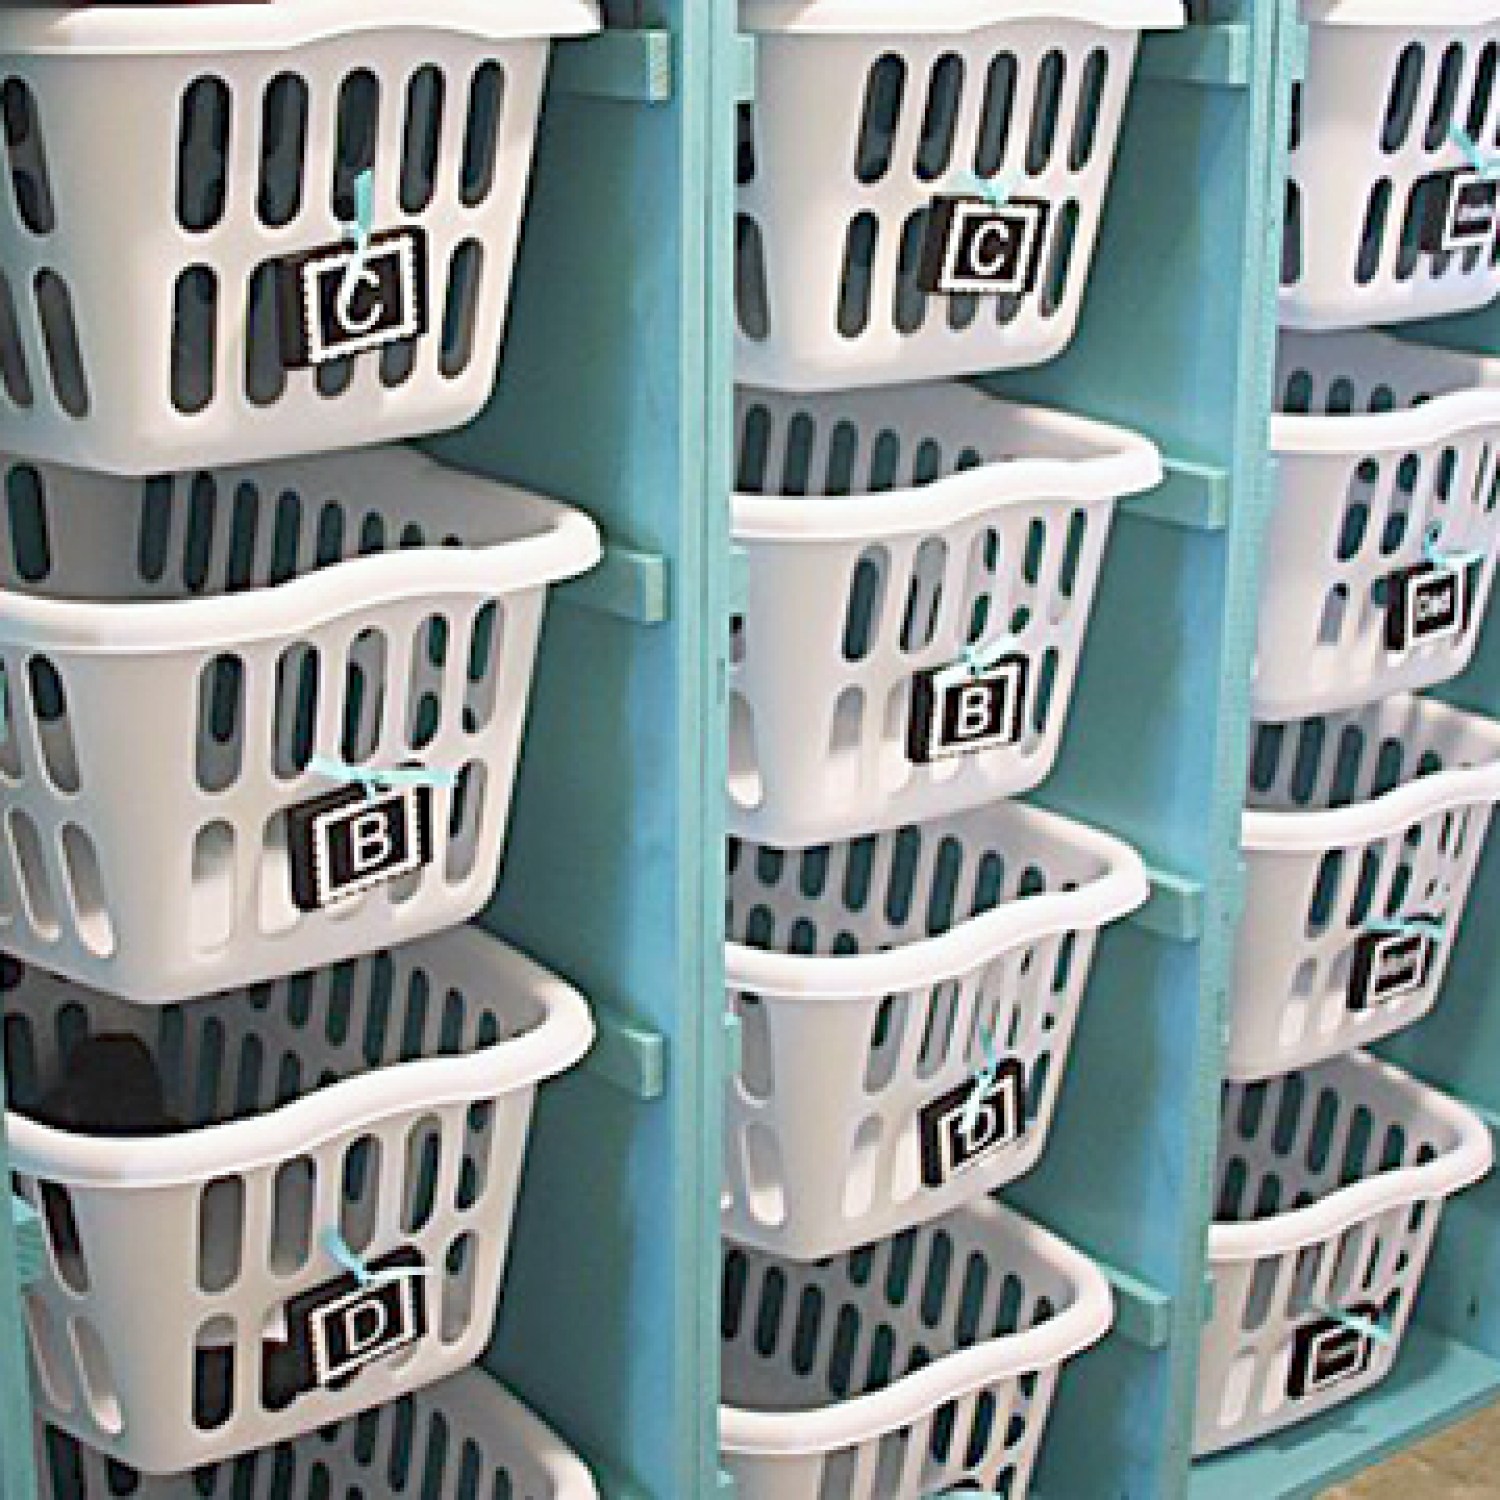 Laundry Room Organization Ideas, Shelves To Hold Laundry Baskets